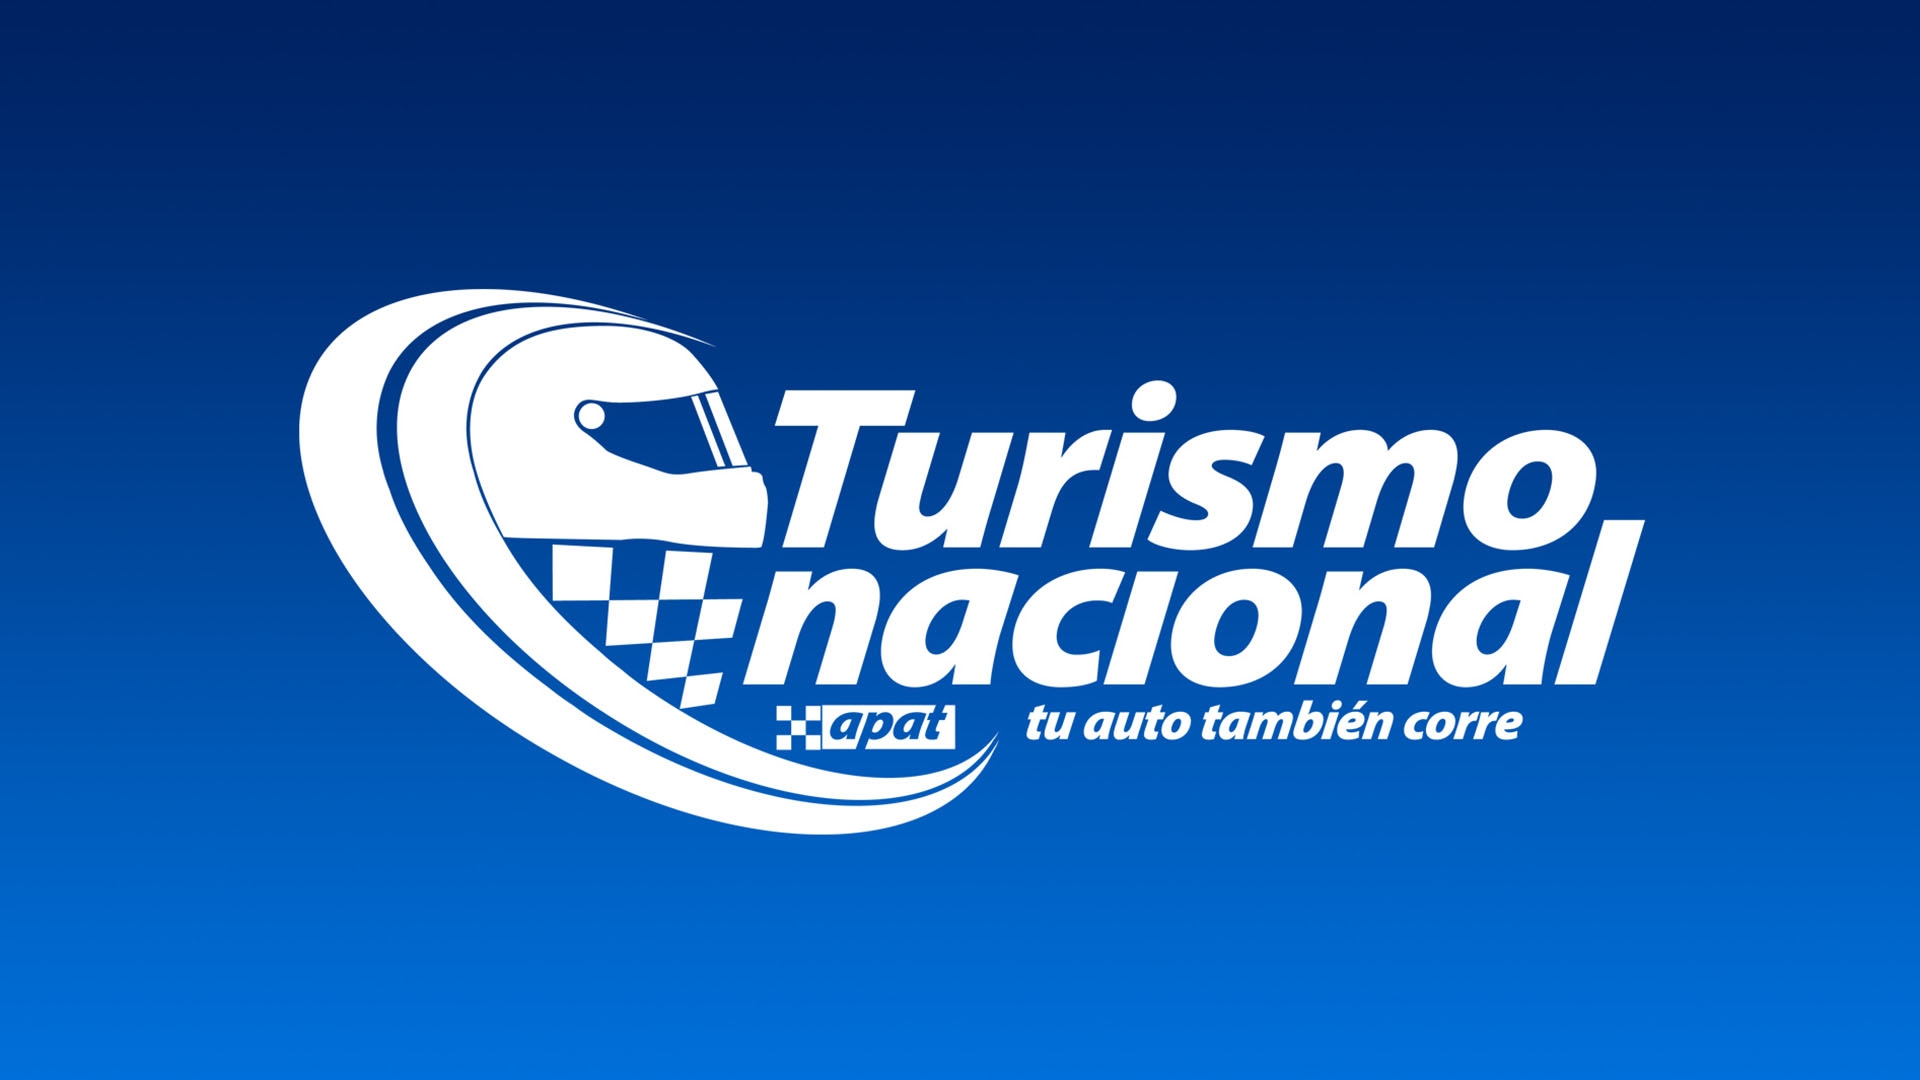 Comodoro Rivadavia, próximo destino del Turismo Nacional